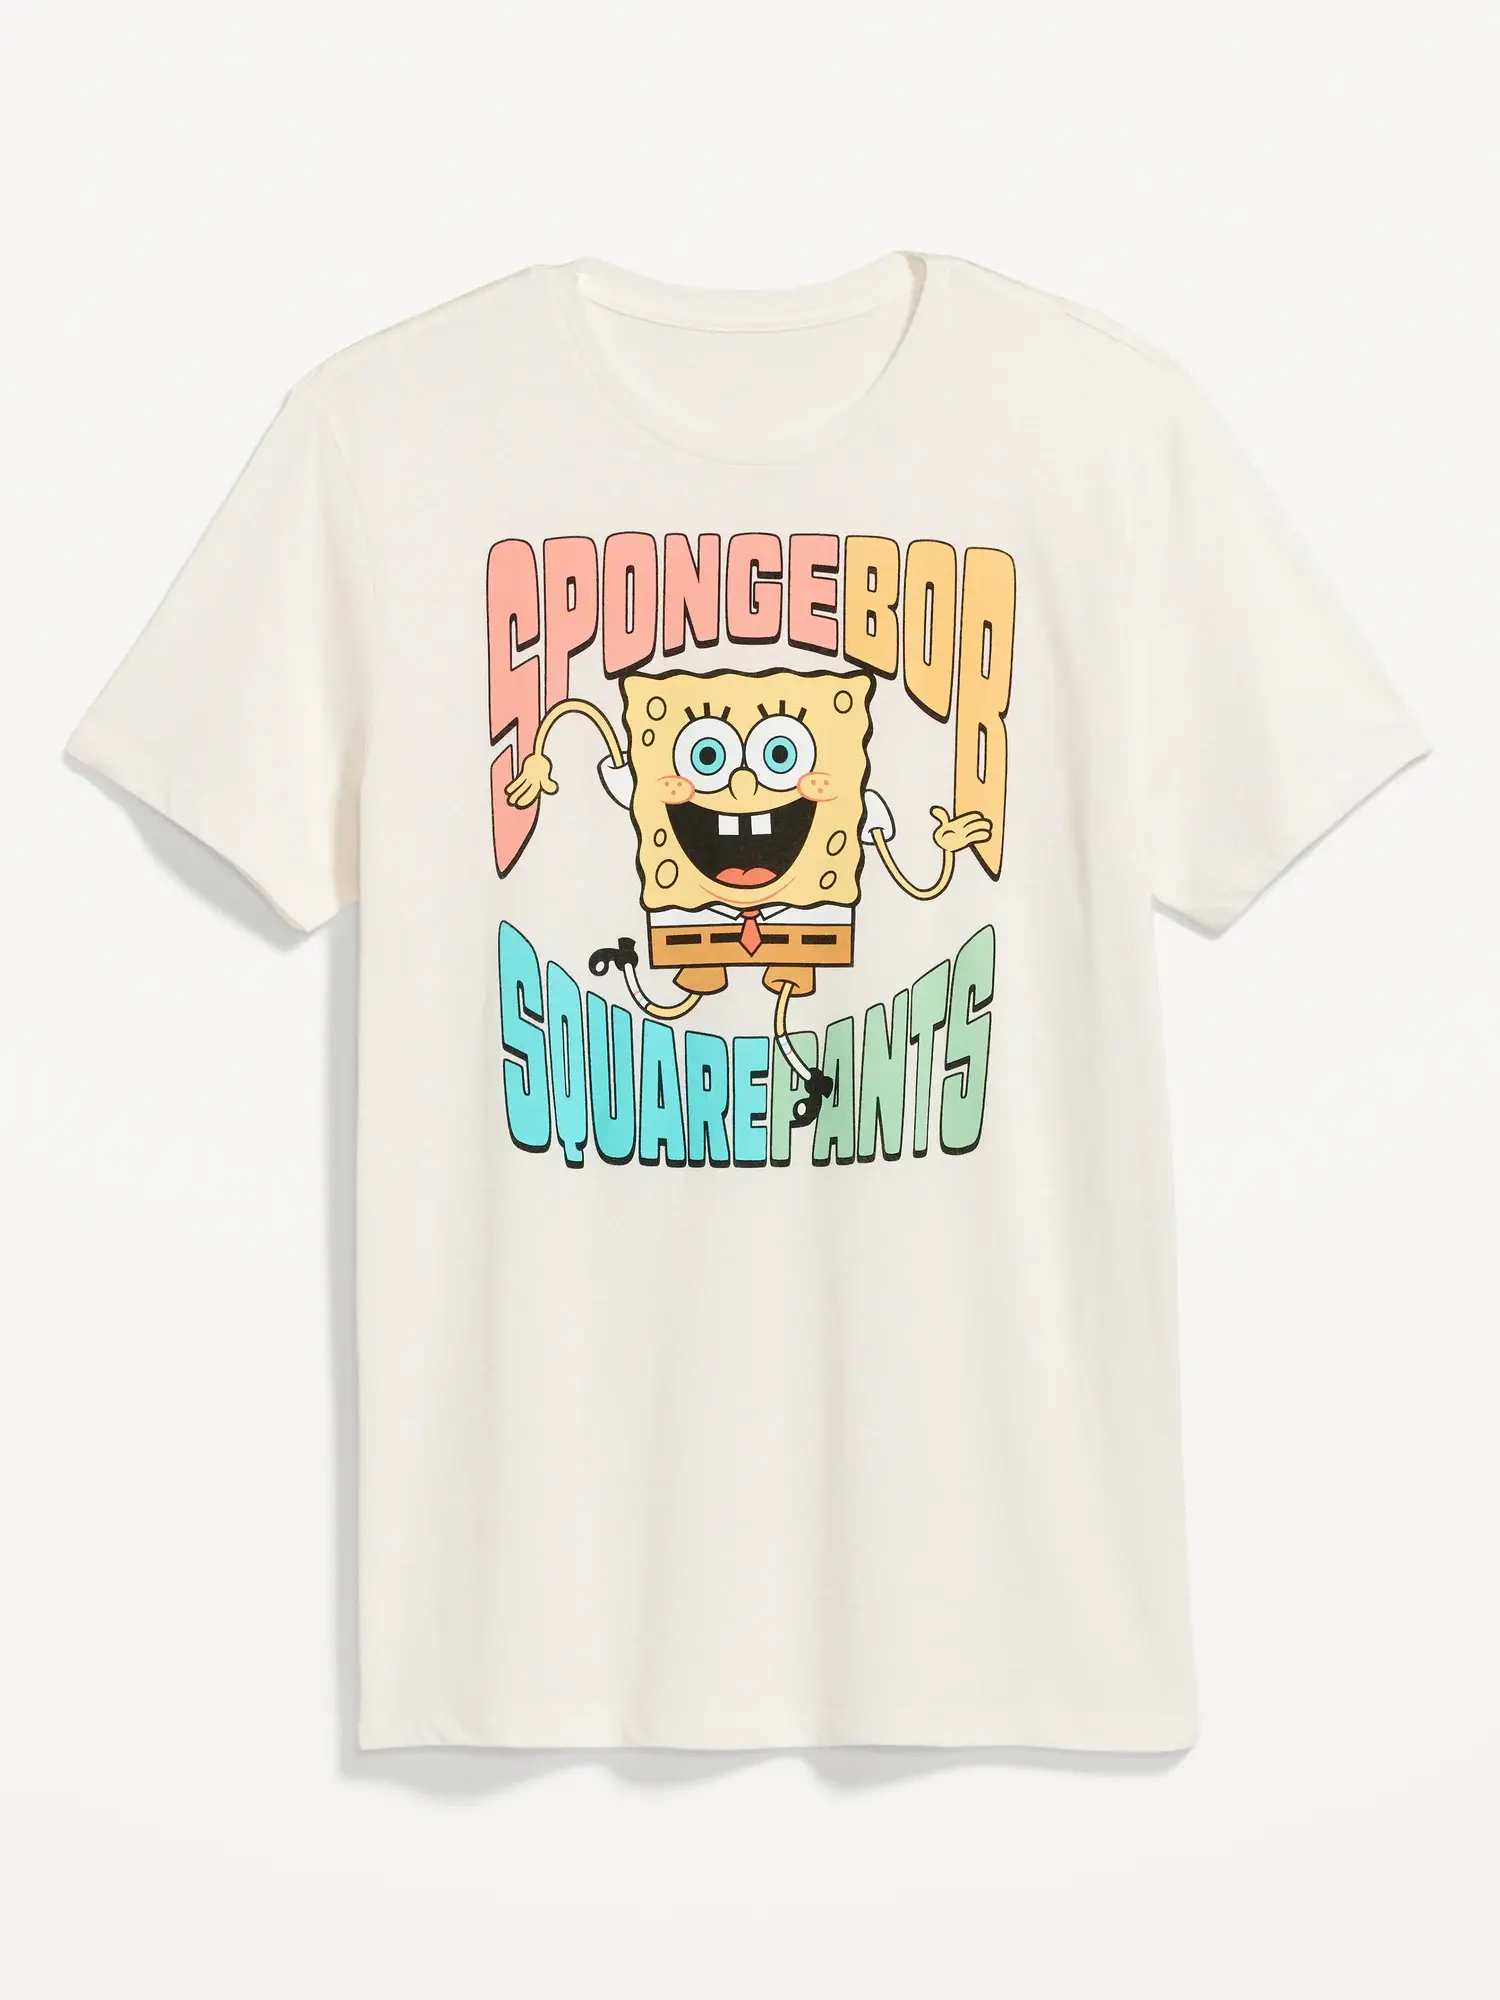 Old Navy SpongeBob SquarePants™ Gender-Neutral T-Shirt for Adults white. 1